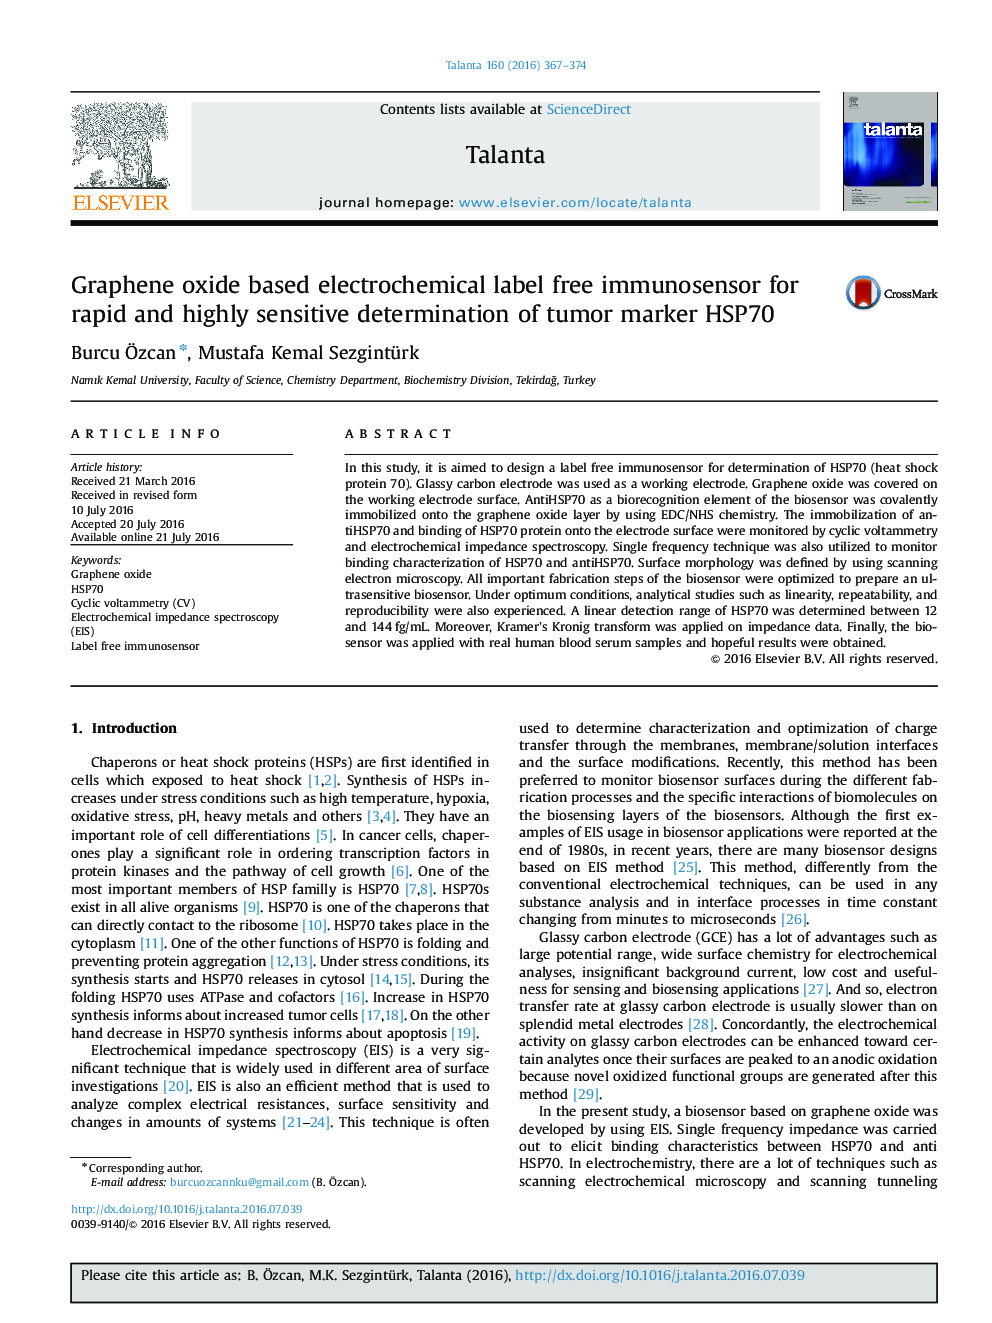 Graphene oxide based electrochemical label free immunosensor for rapid and highly sensitive determination of tumor marker HSP70